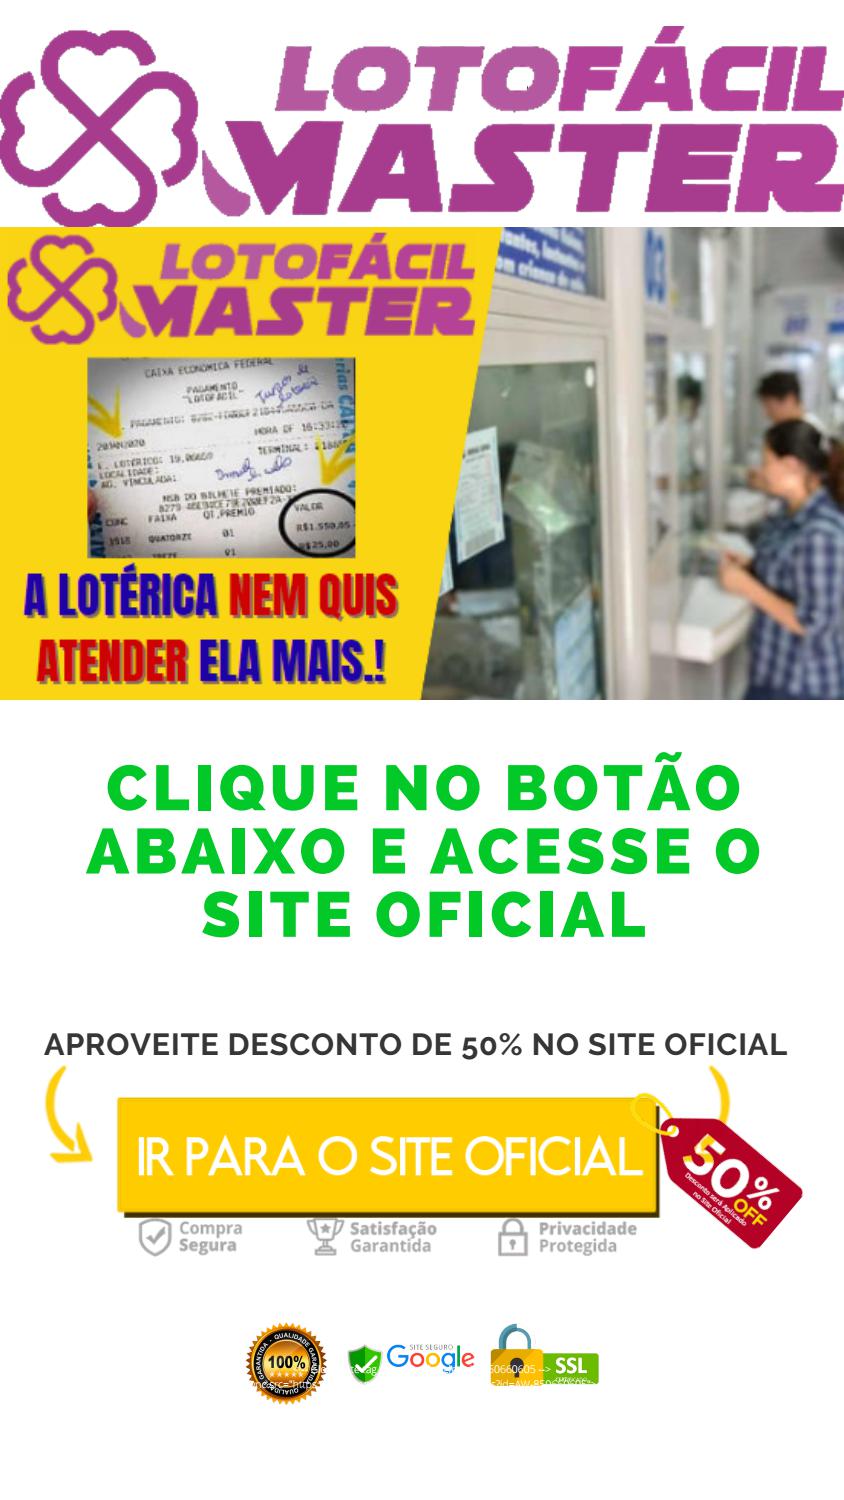 Buy tickets for Aplicativo Robô Da LotoFácil Funciona? Aplicativo